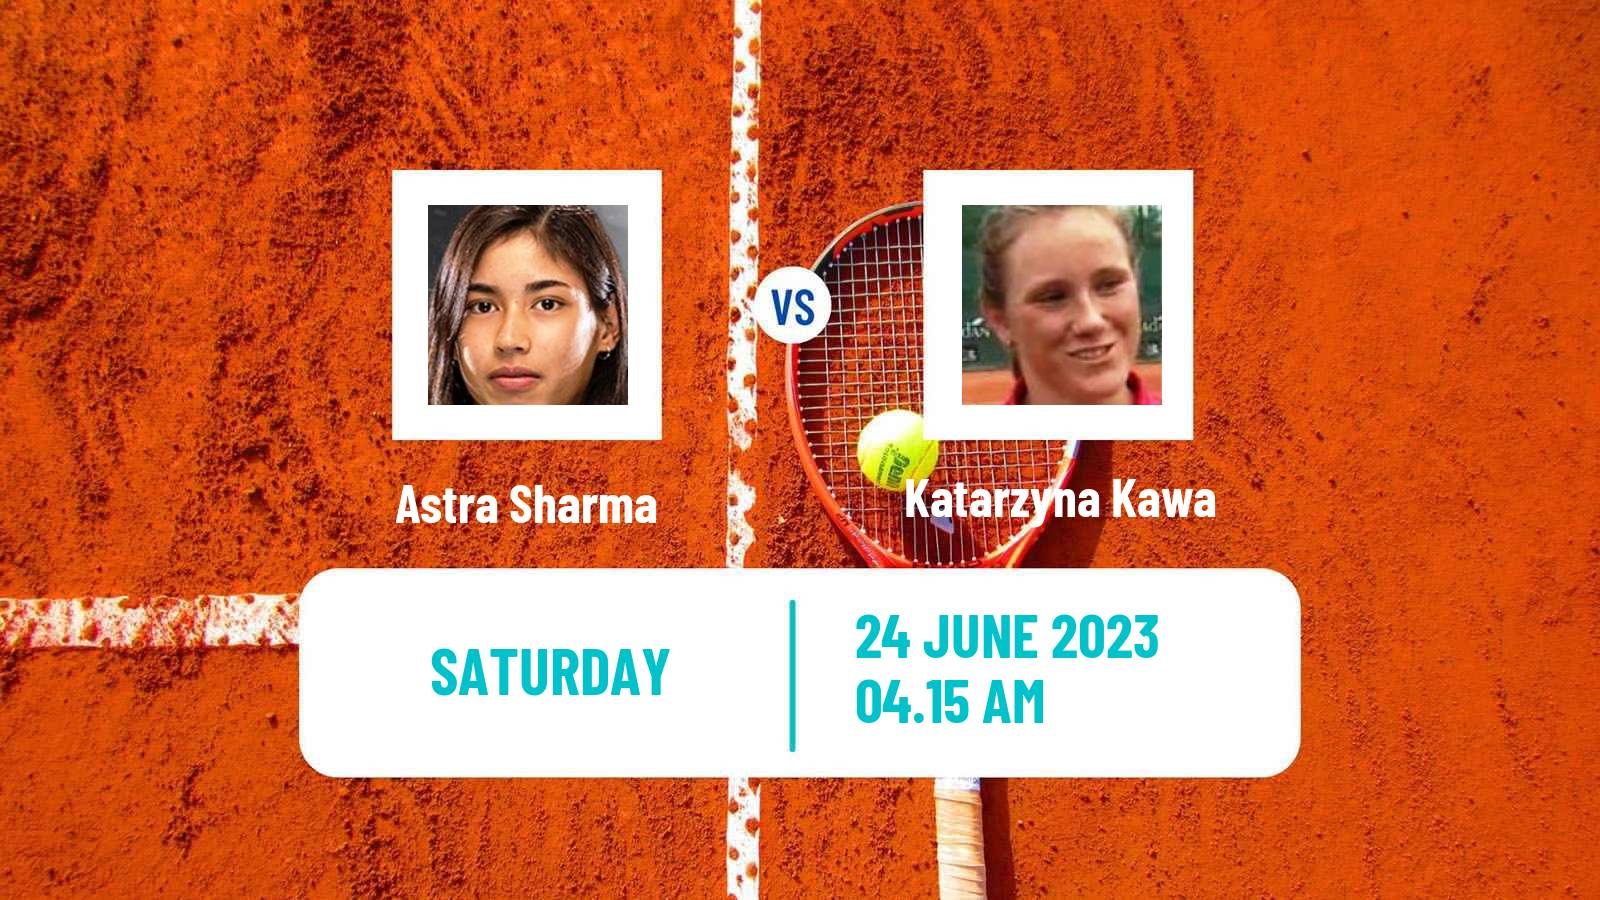 Tennis ITF W40 Ystad Women Astra Sharma - Katarzyna Kawa